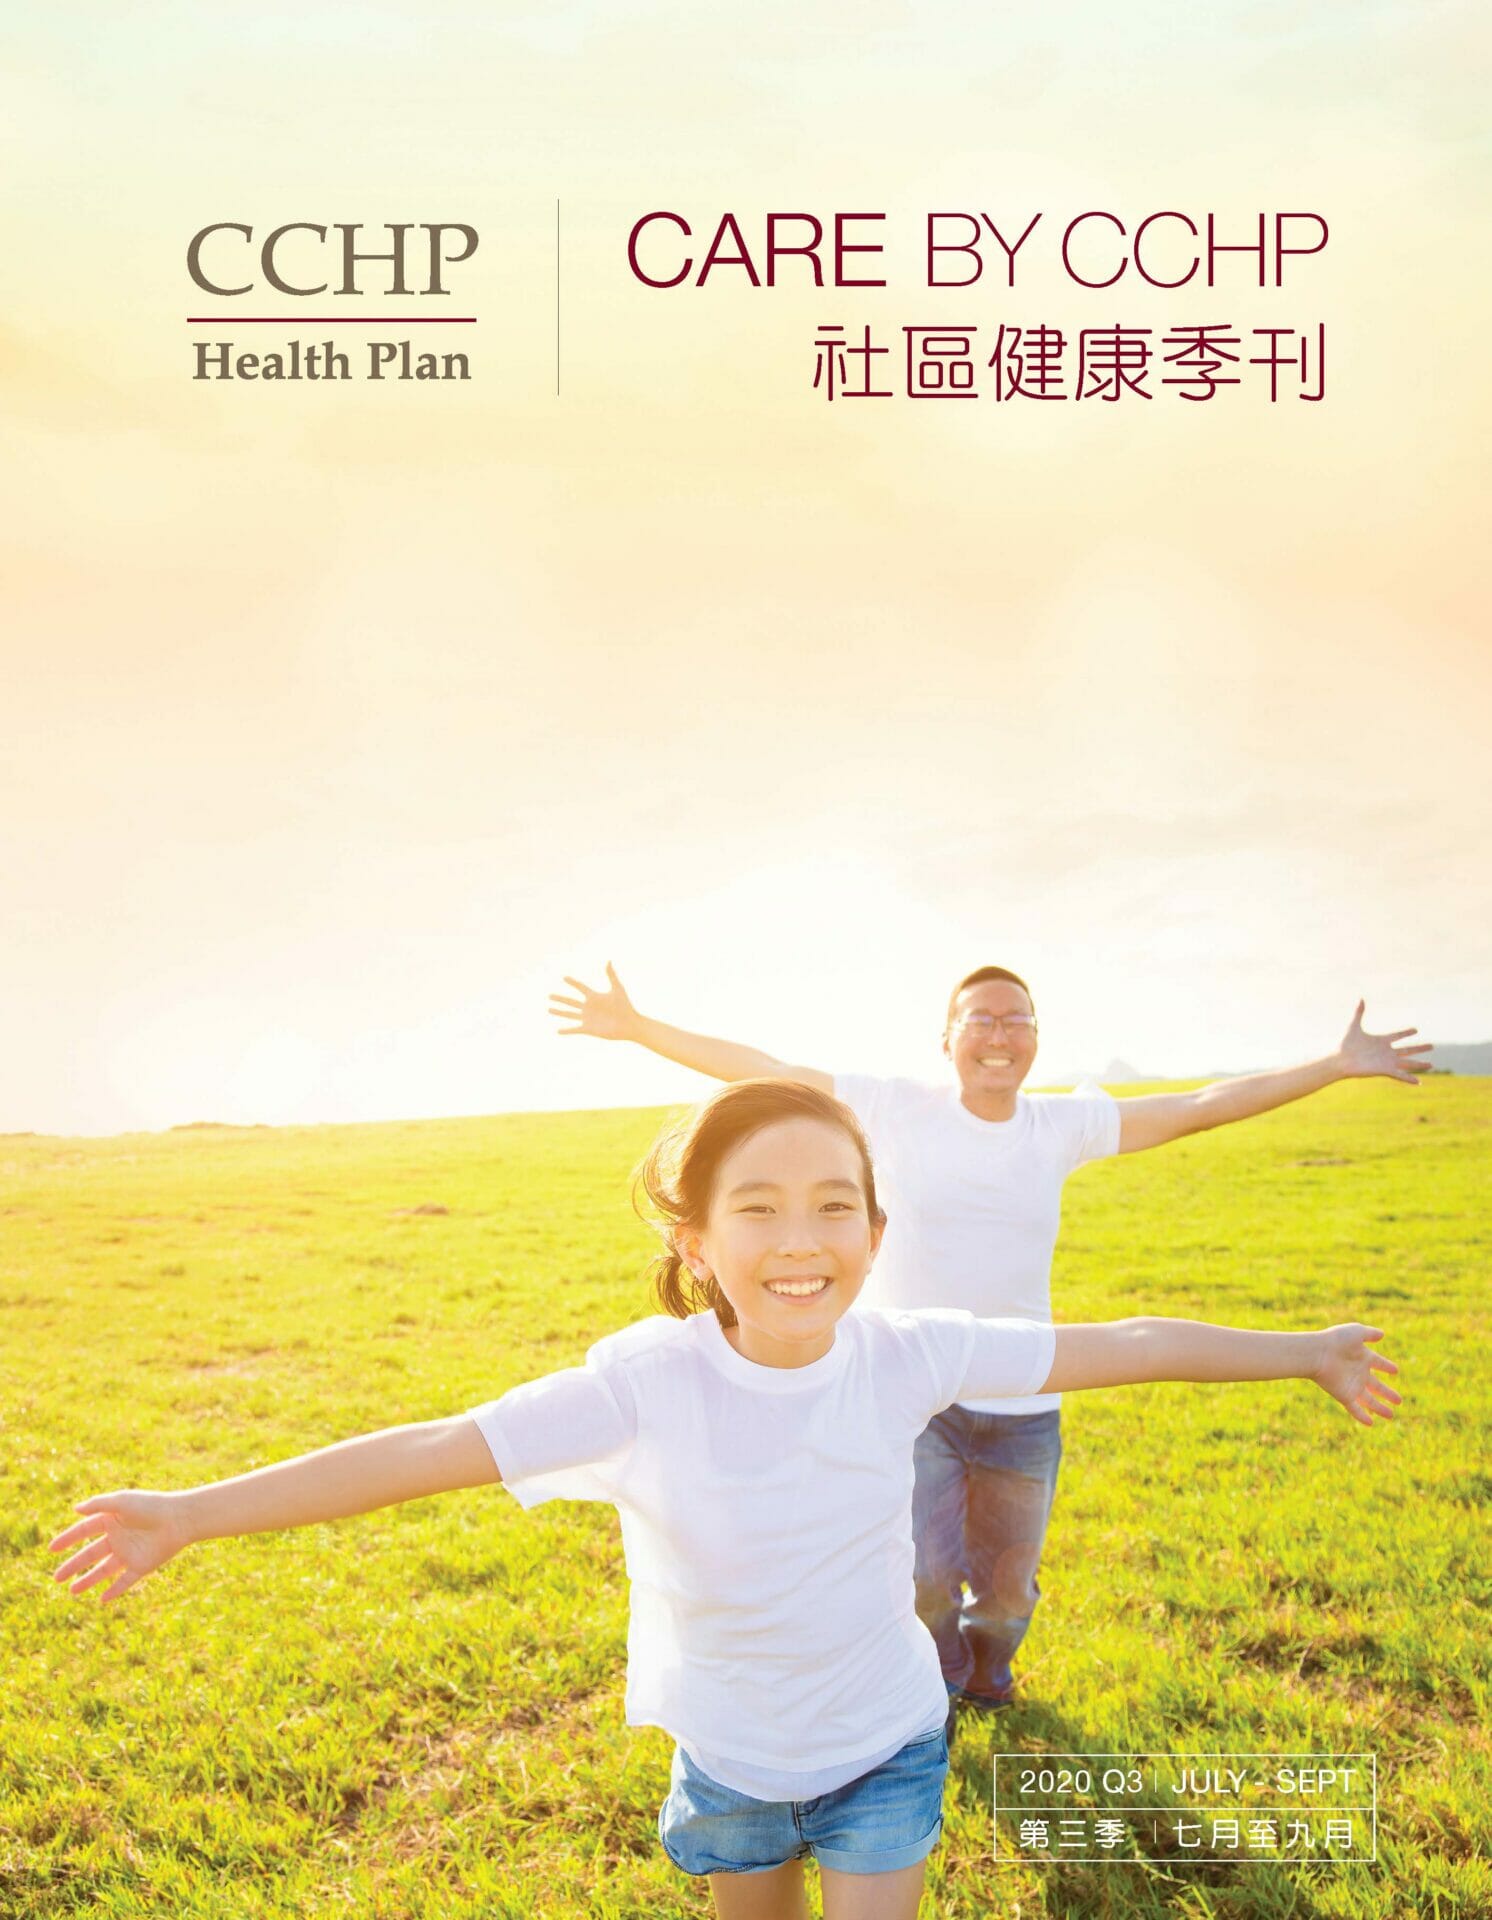 CCHP 2020 Q3 newsletter, embrace sunshine